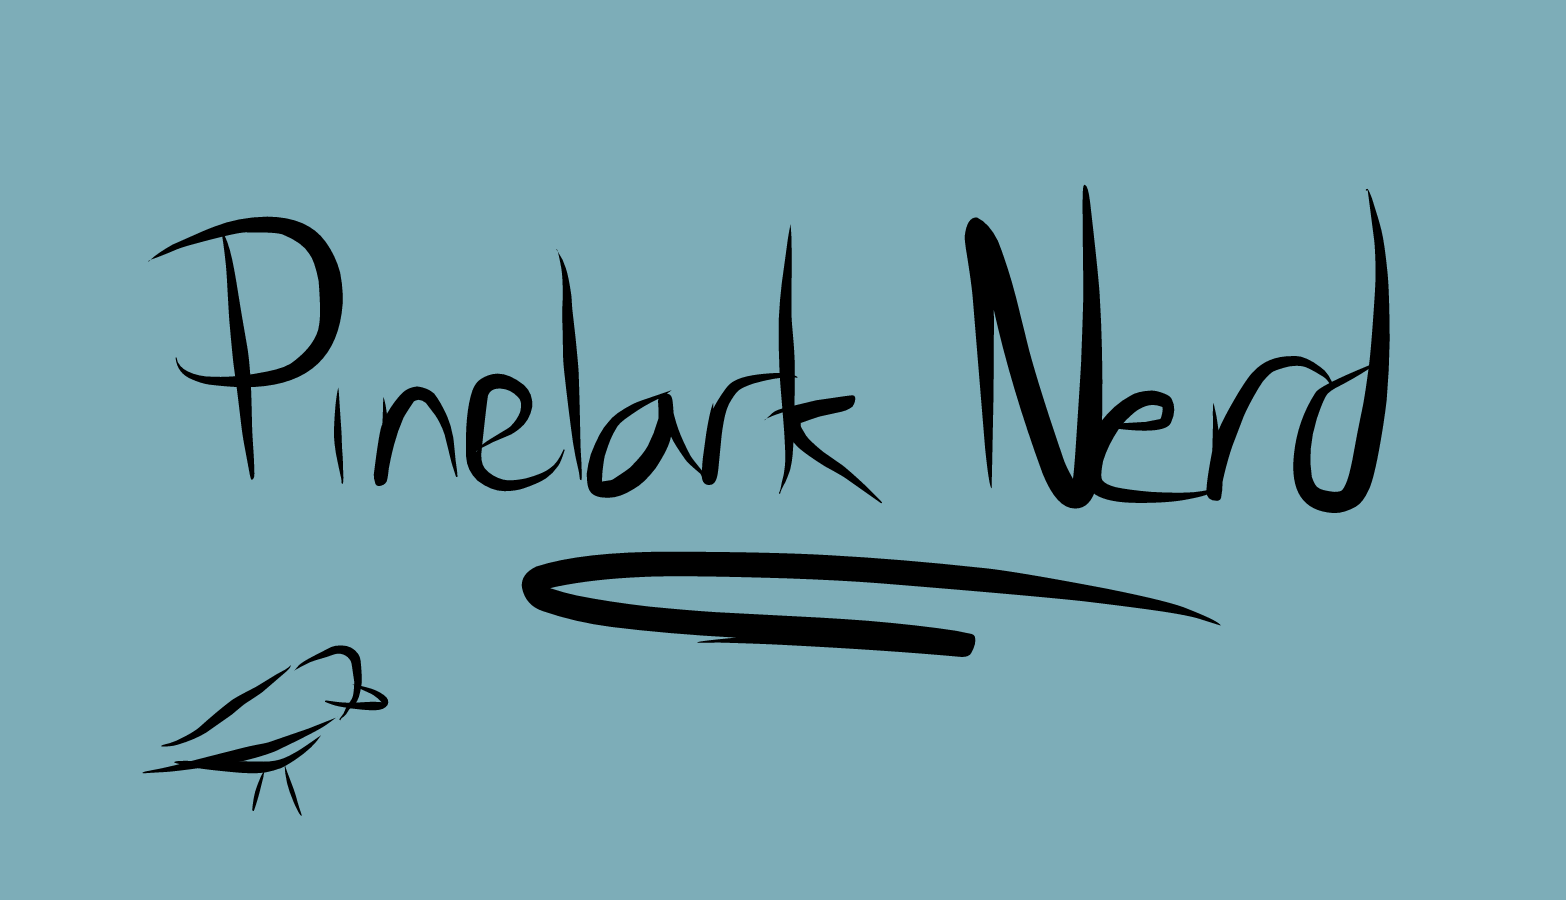 Pinelark Nerd banner